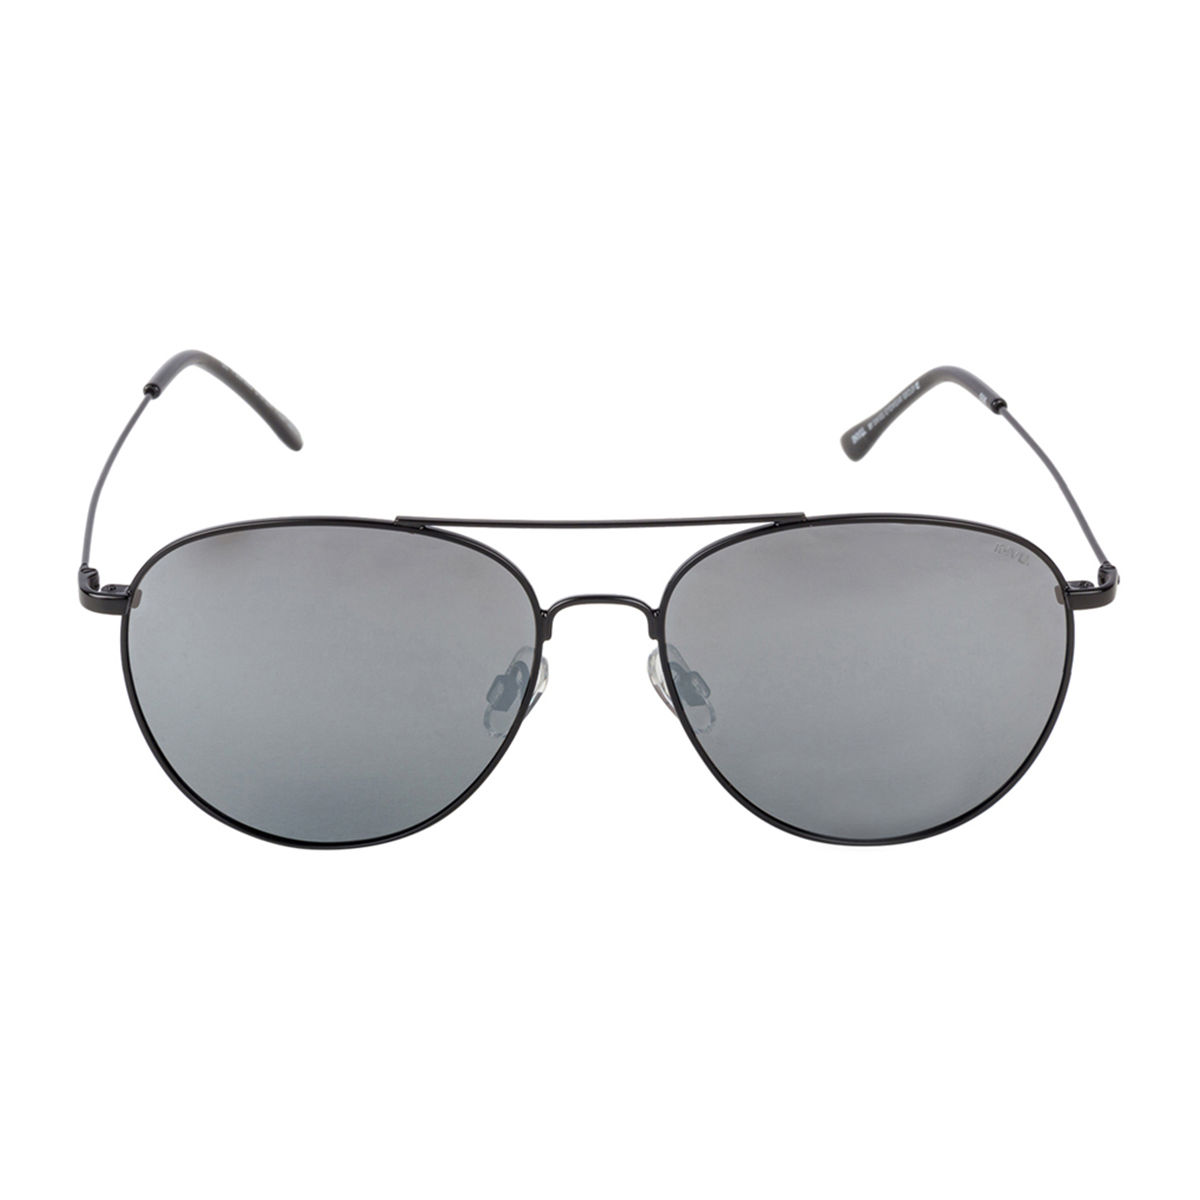 Invu Sunglasses Aviator With Silver Lens For Men